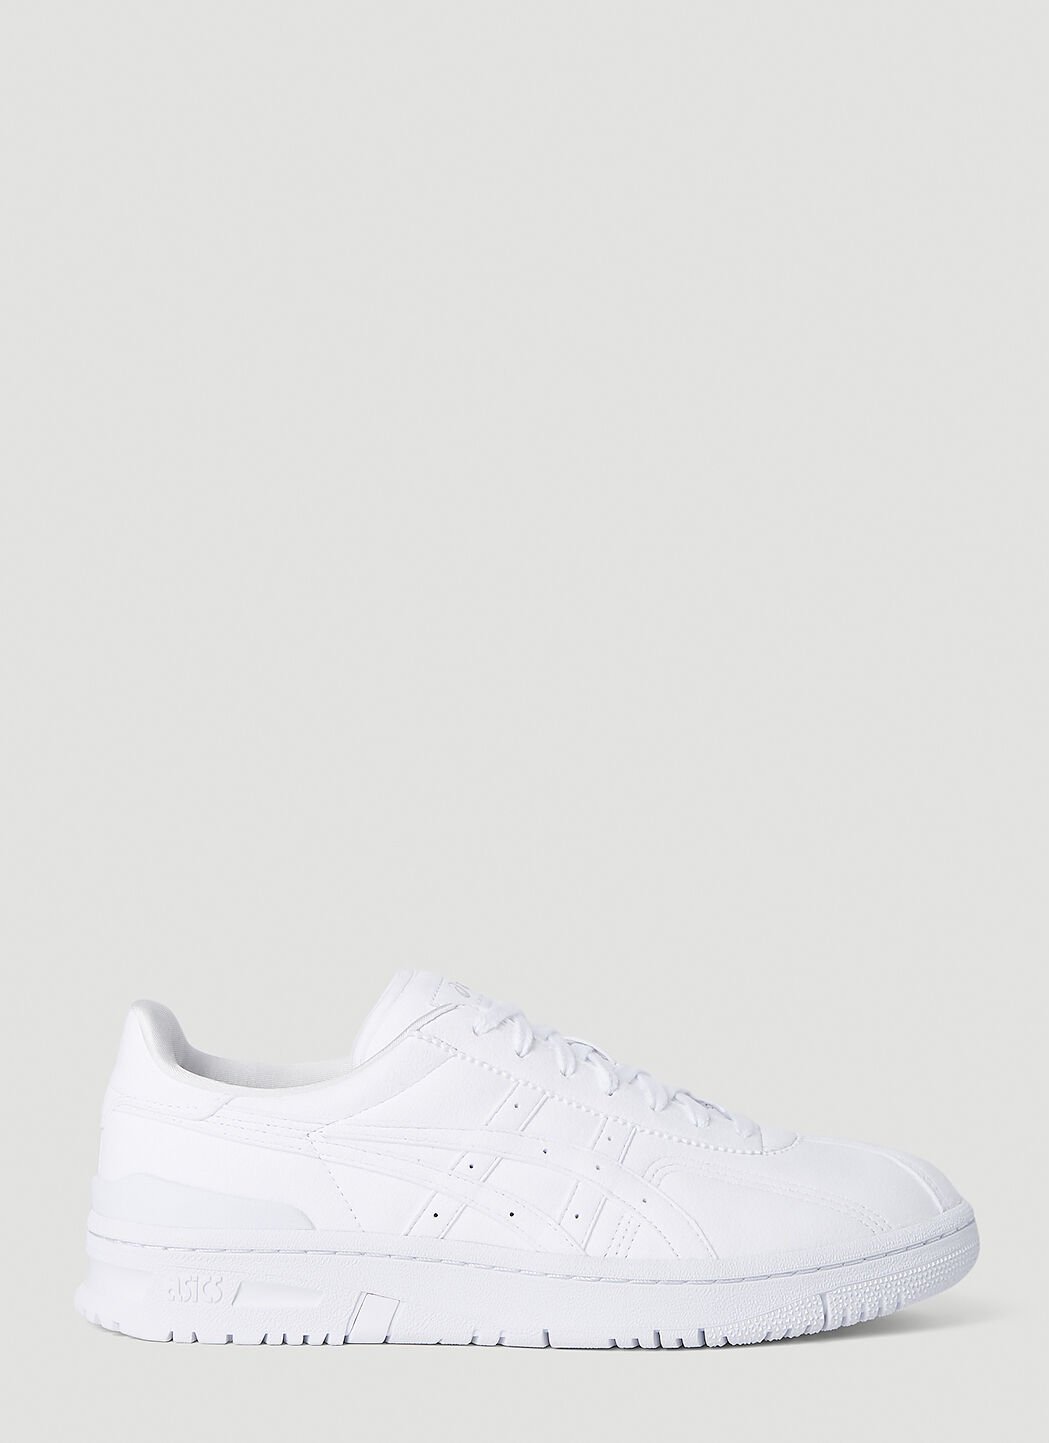 Comme des Garçons SHIRT x Asics Sneakers White cdg0156002